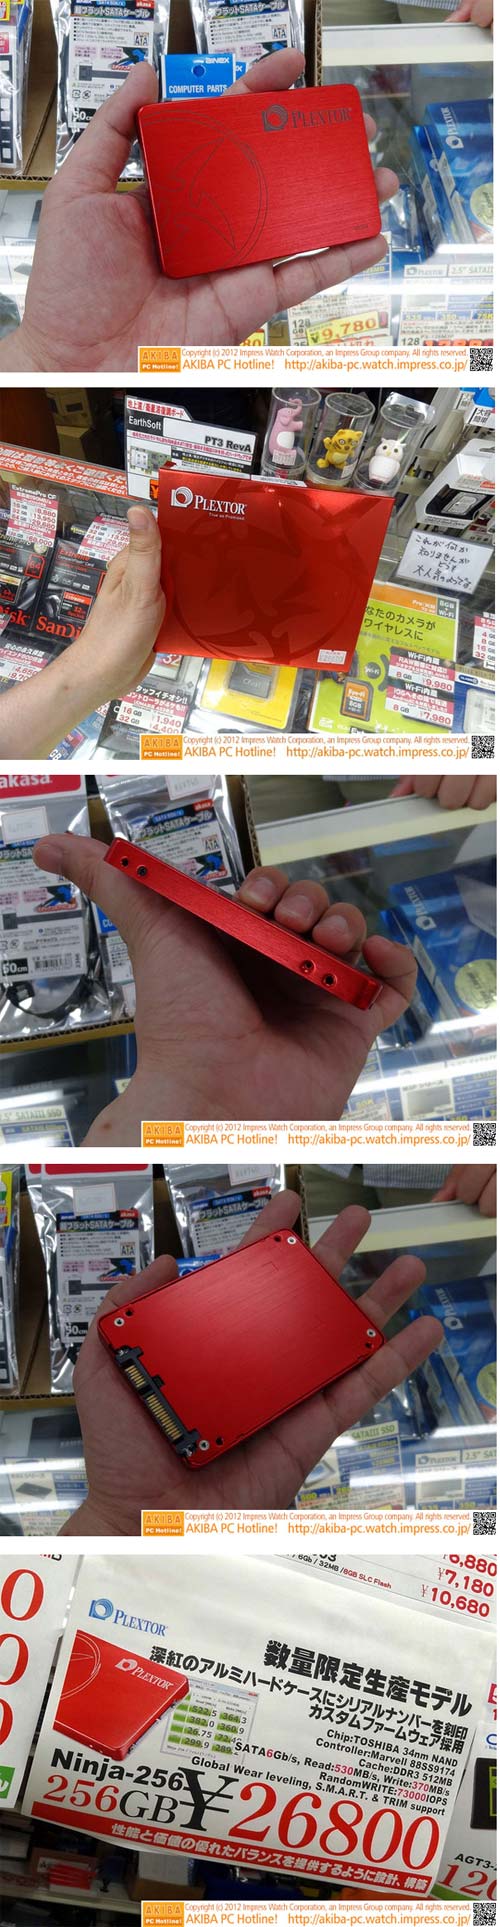 SSD Plextor Ninja-256 замечен в Японии